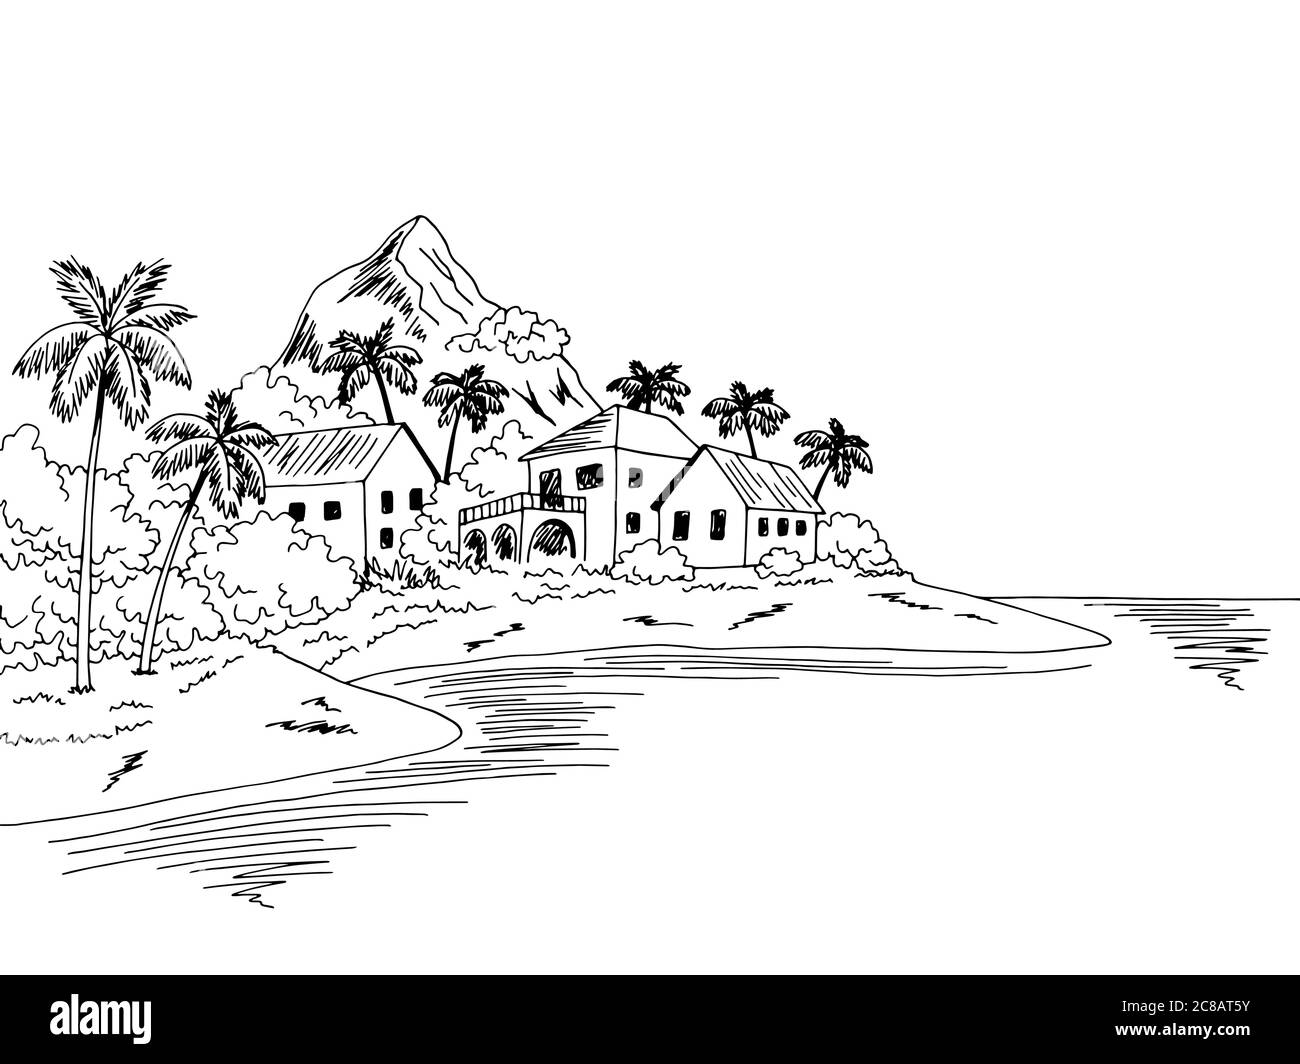 Dorf Meer Grafik schwarz weiß Bucht Landschaft Skizze Illustration Vektor Stock Vektor